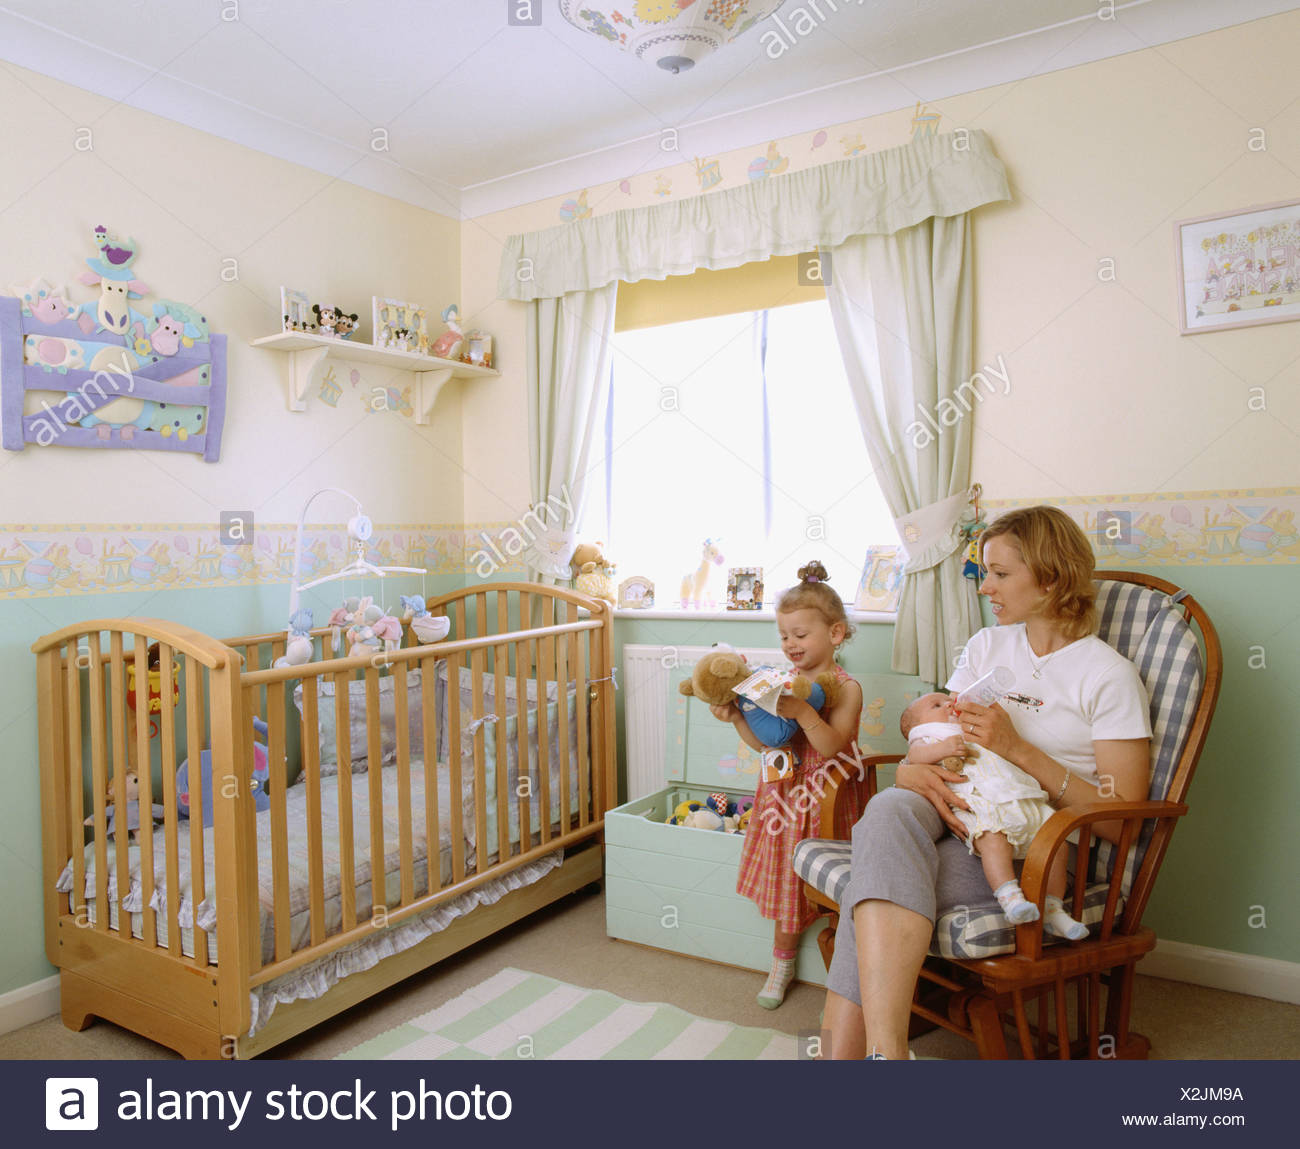 nursery cot